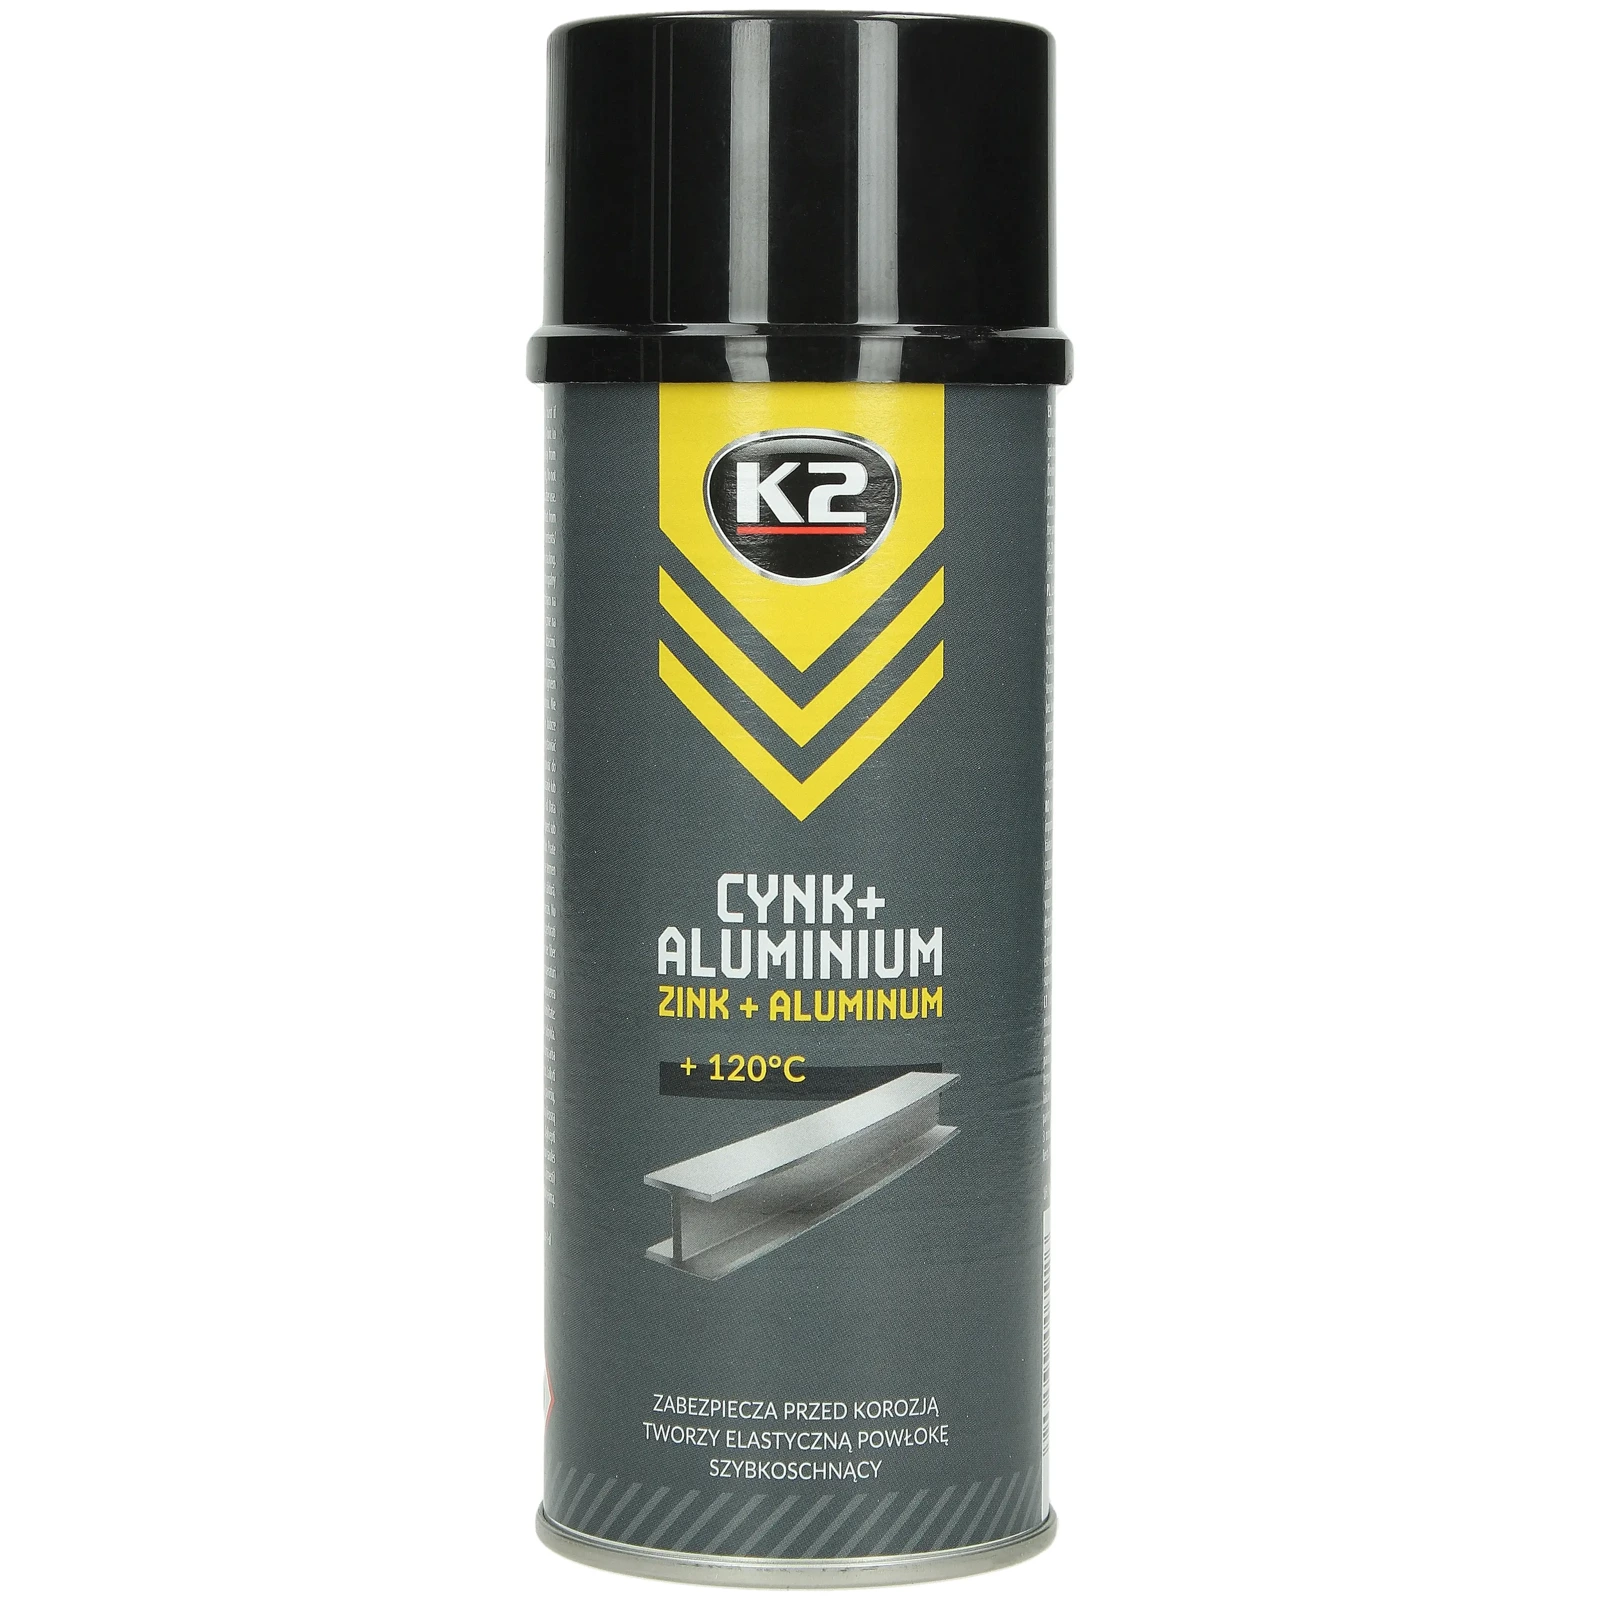 Cynk + aluminium w sprayu K2 400ml